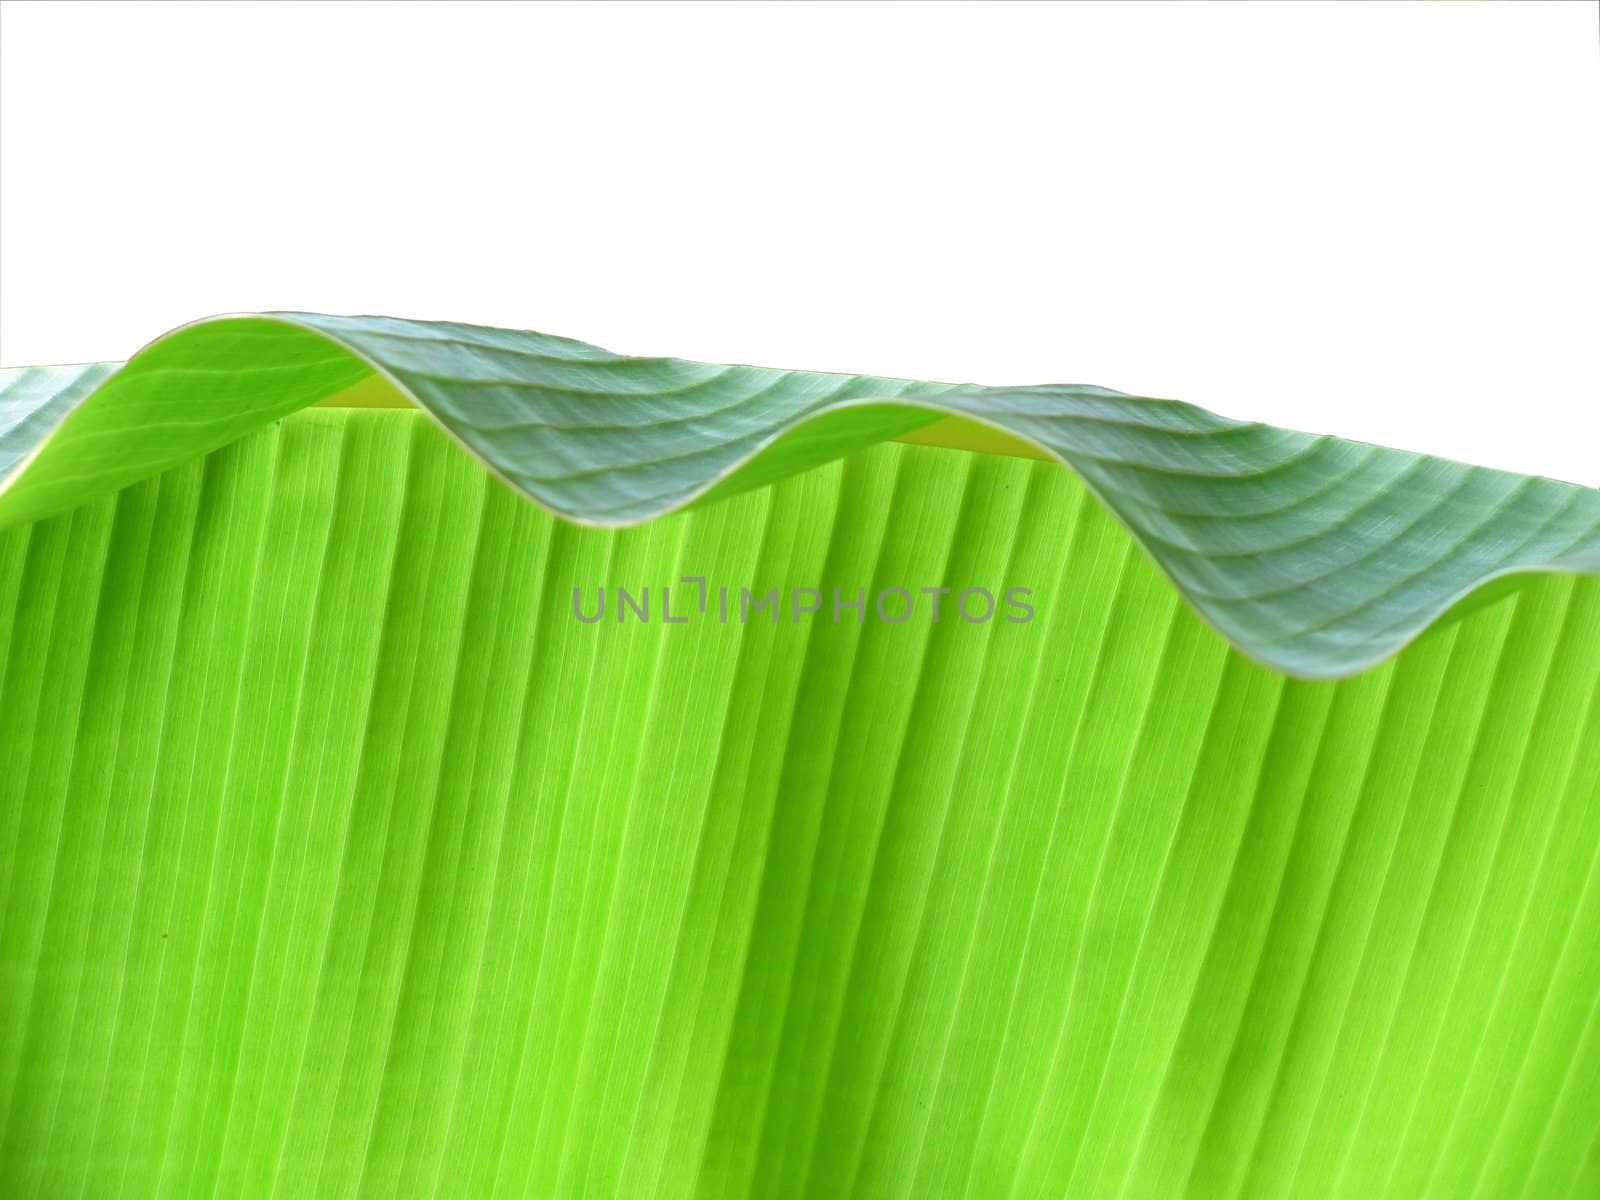 banna leaf texture: top fold by lkant